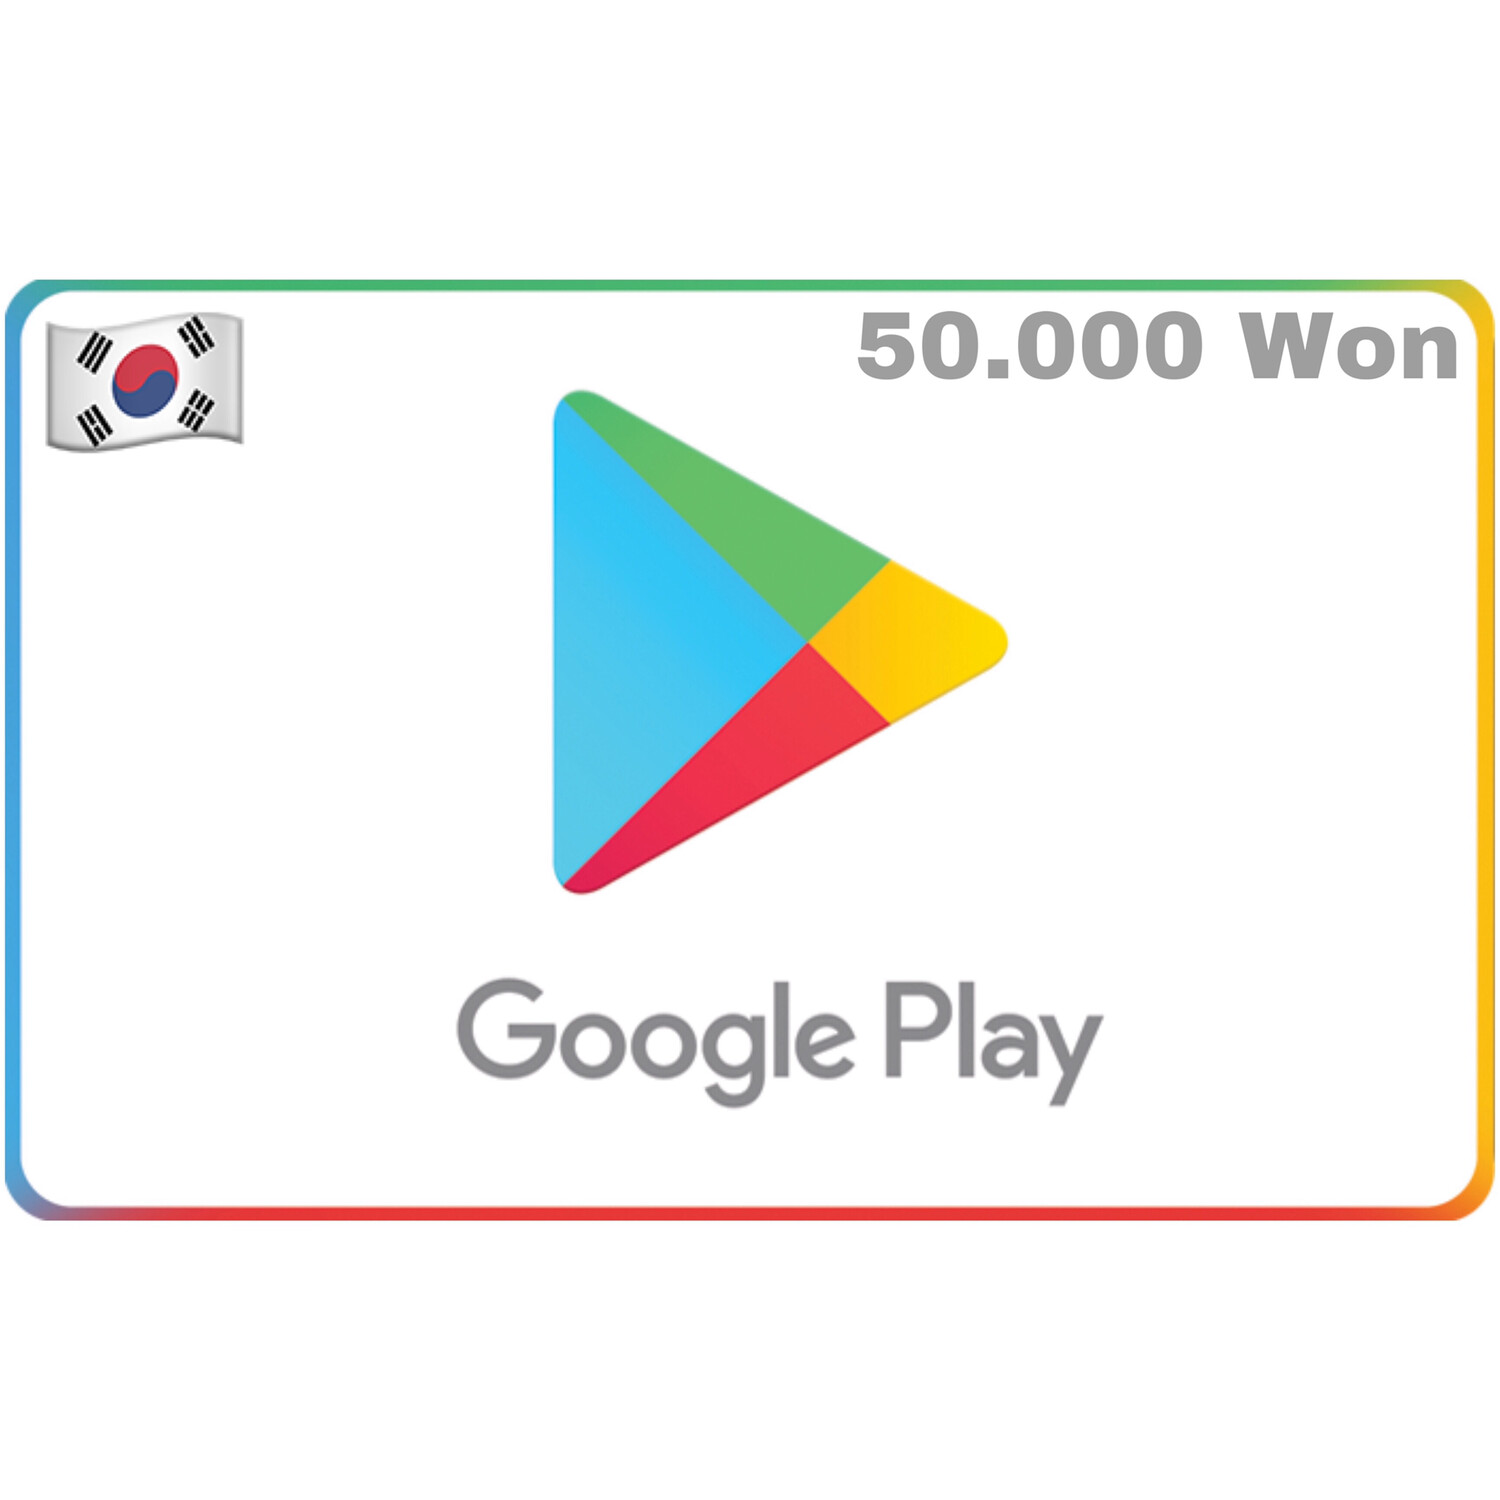 Google Play Korea 50,000 Won